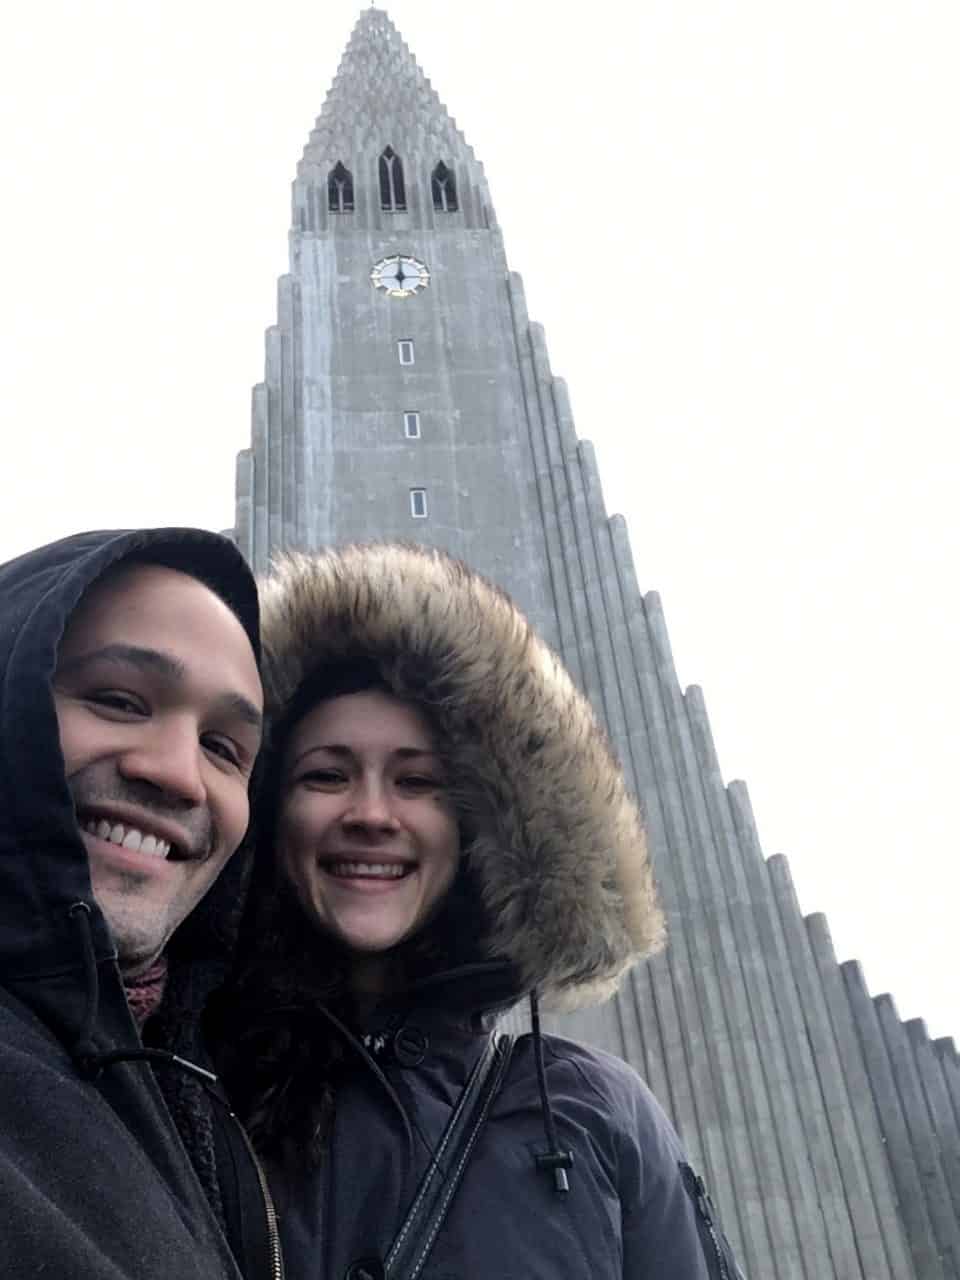 The big church in Reykjavik